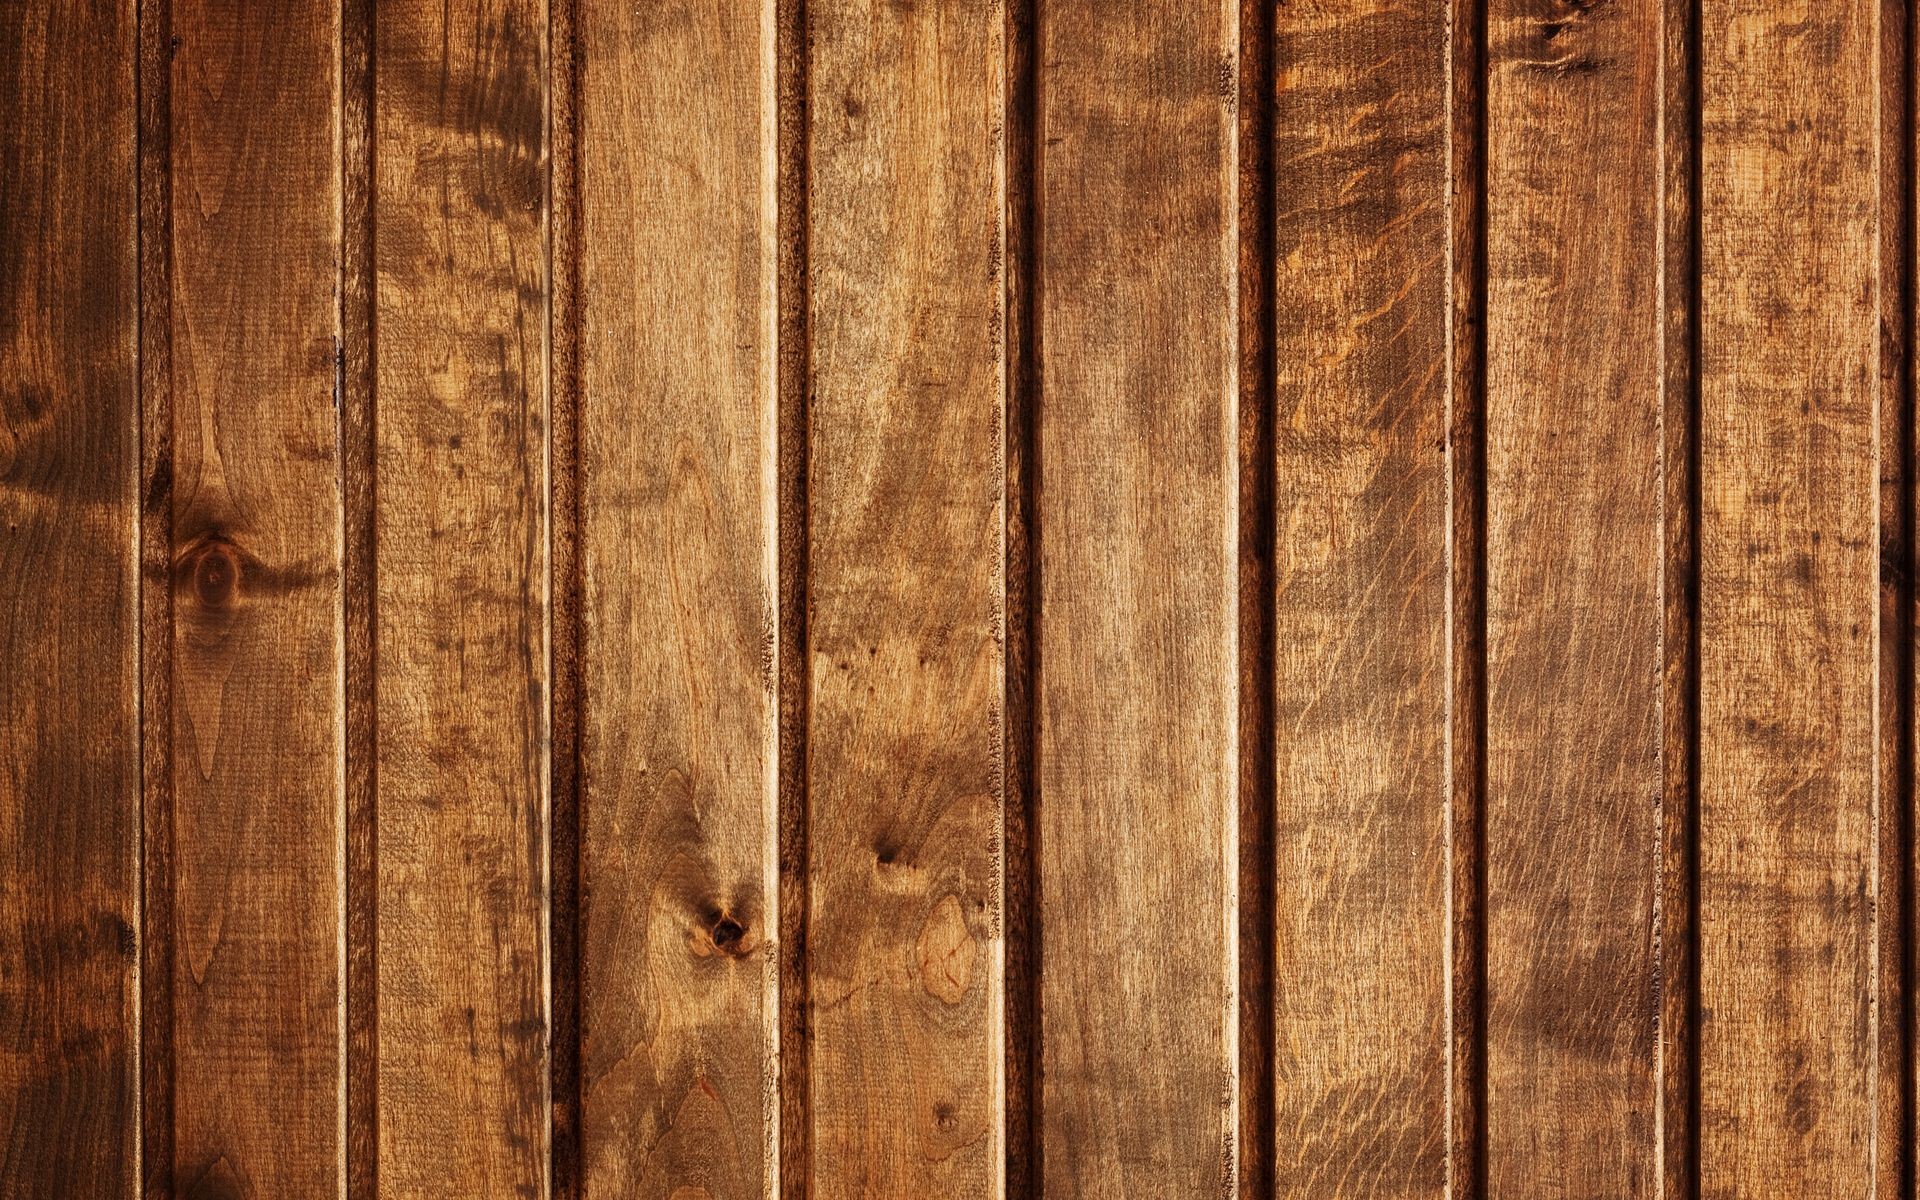 Wood background image ·① Download free wallpapers for desktop, mobile